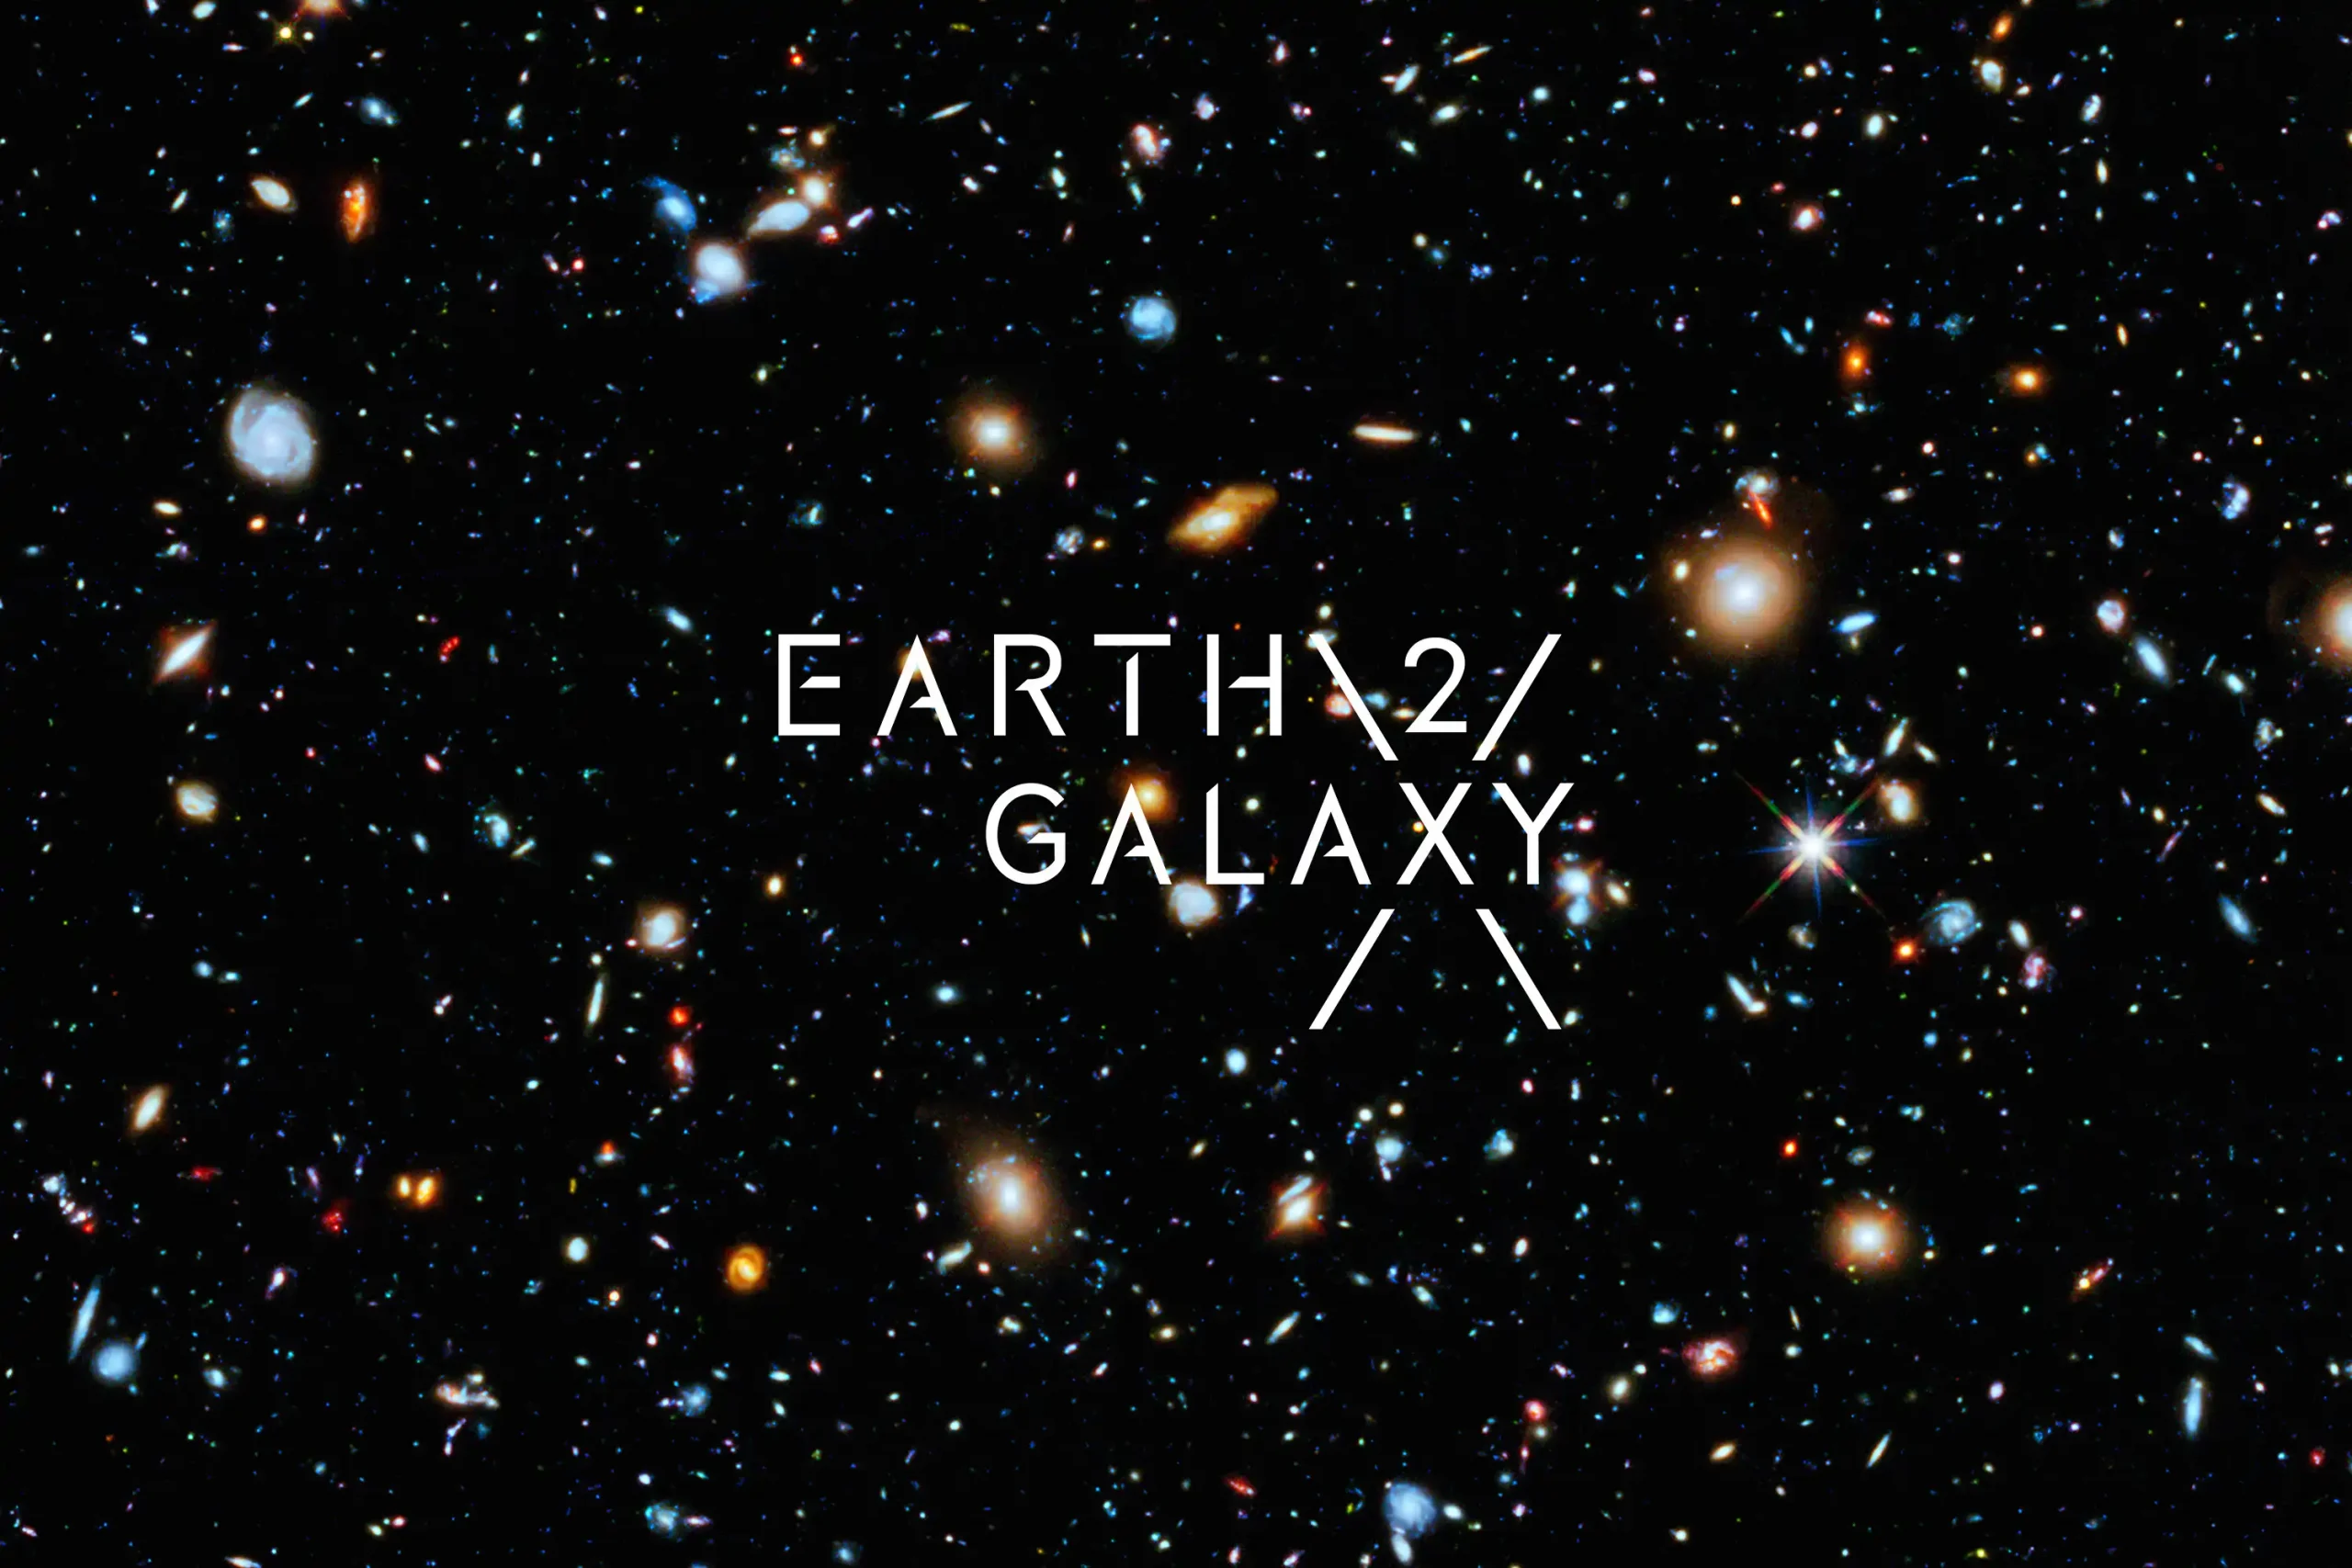 Earth 2 Galaxy